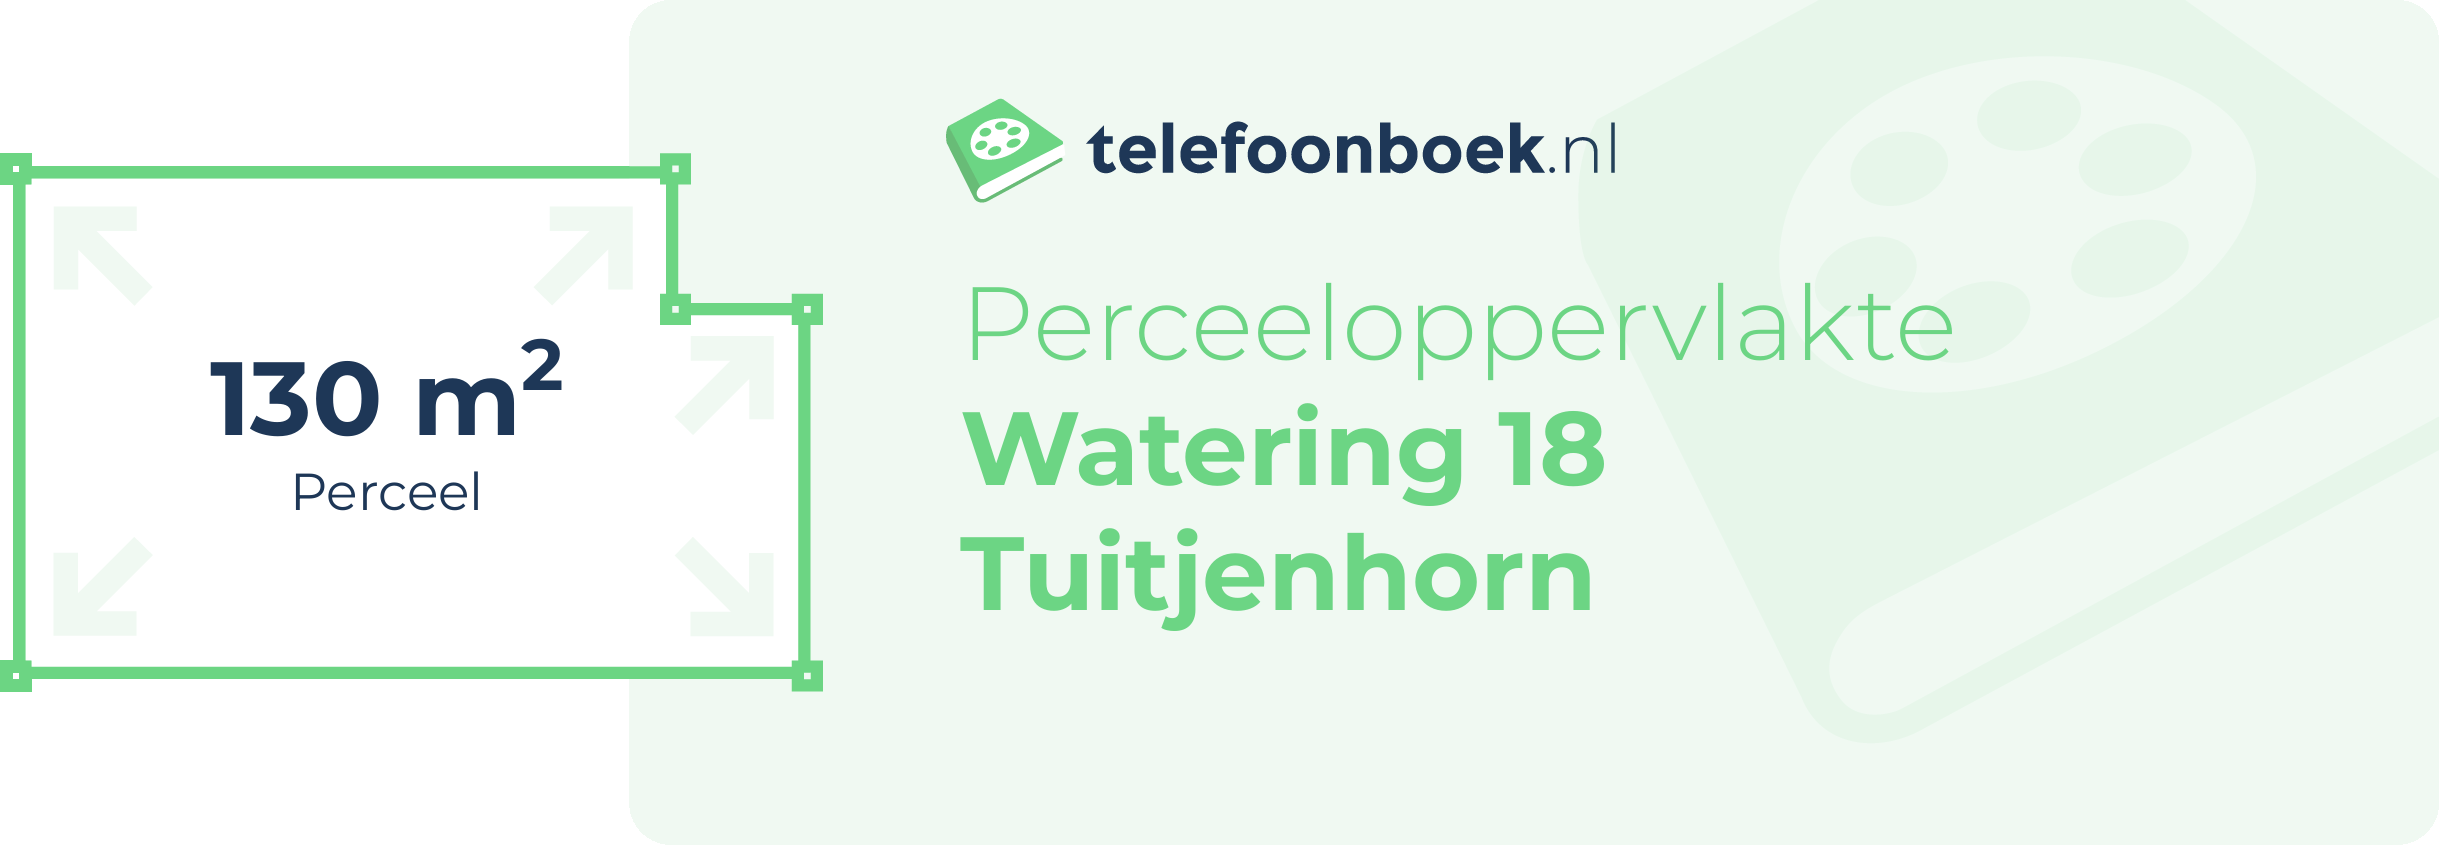 Perceeloppervlakte Watering 18 Tuitjenhorn